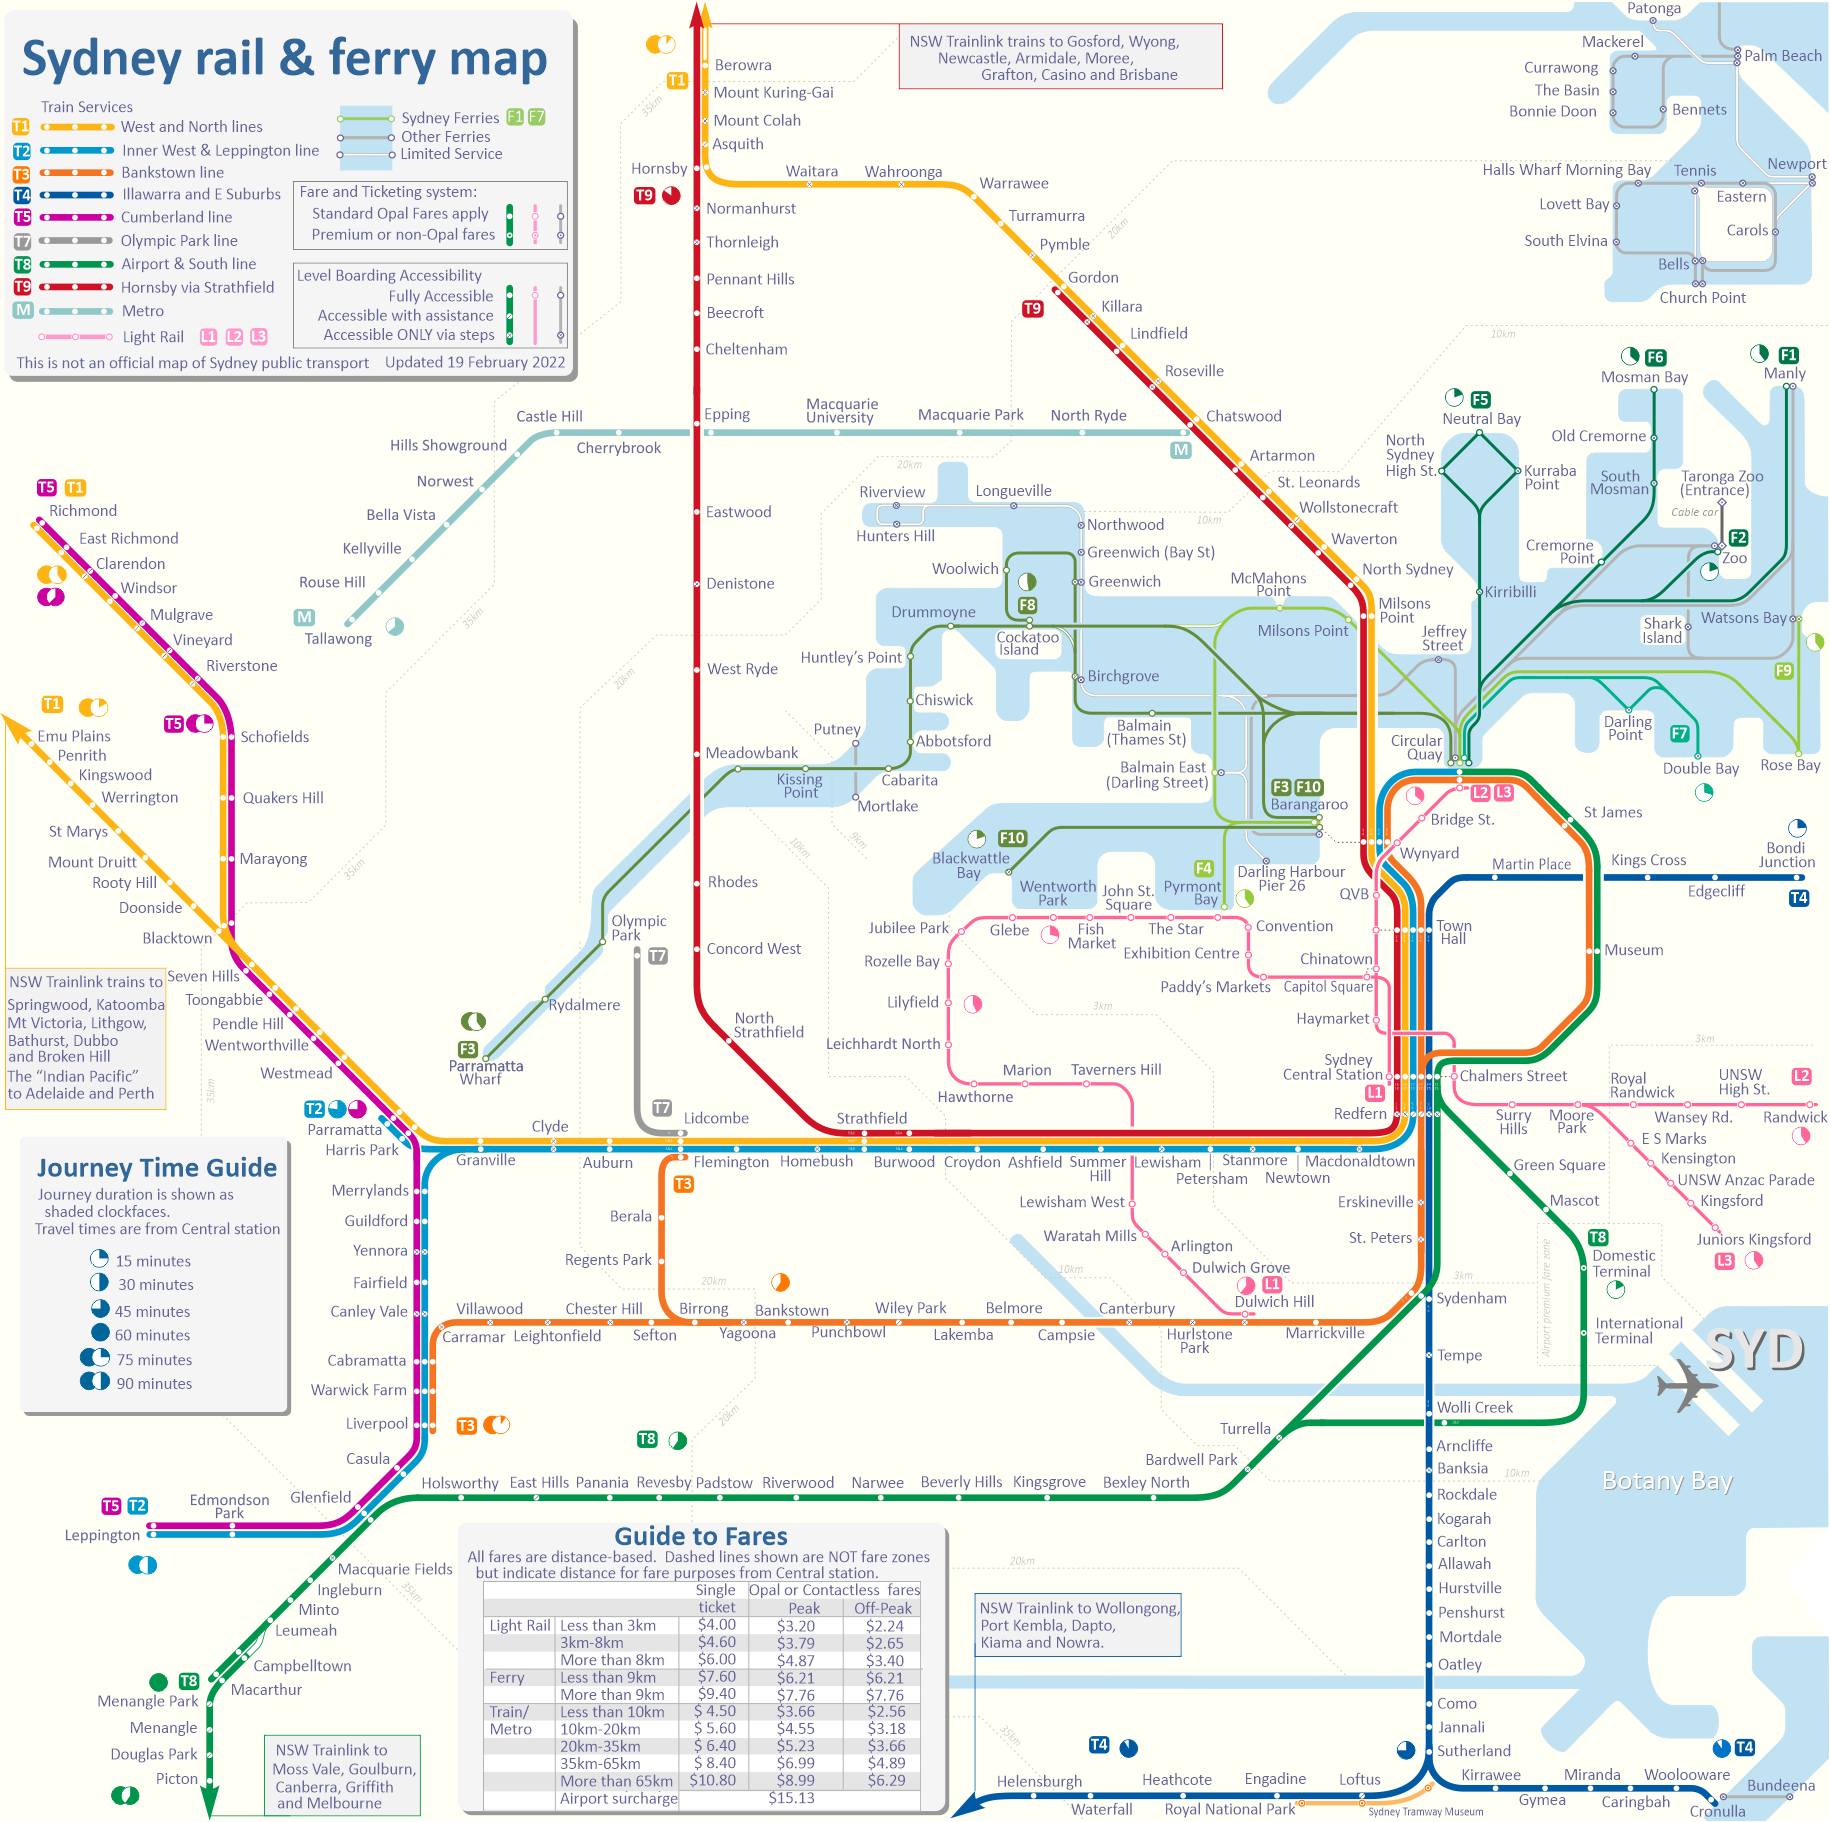 city rail network map pdf Sydney Train Map city rail network map pdf